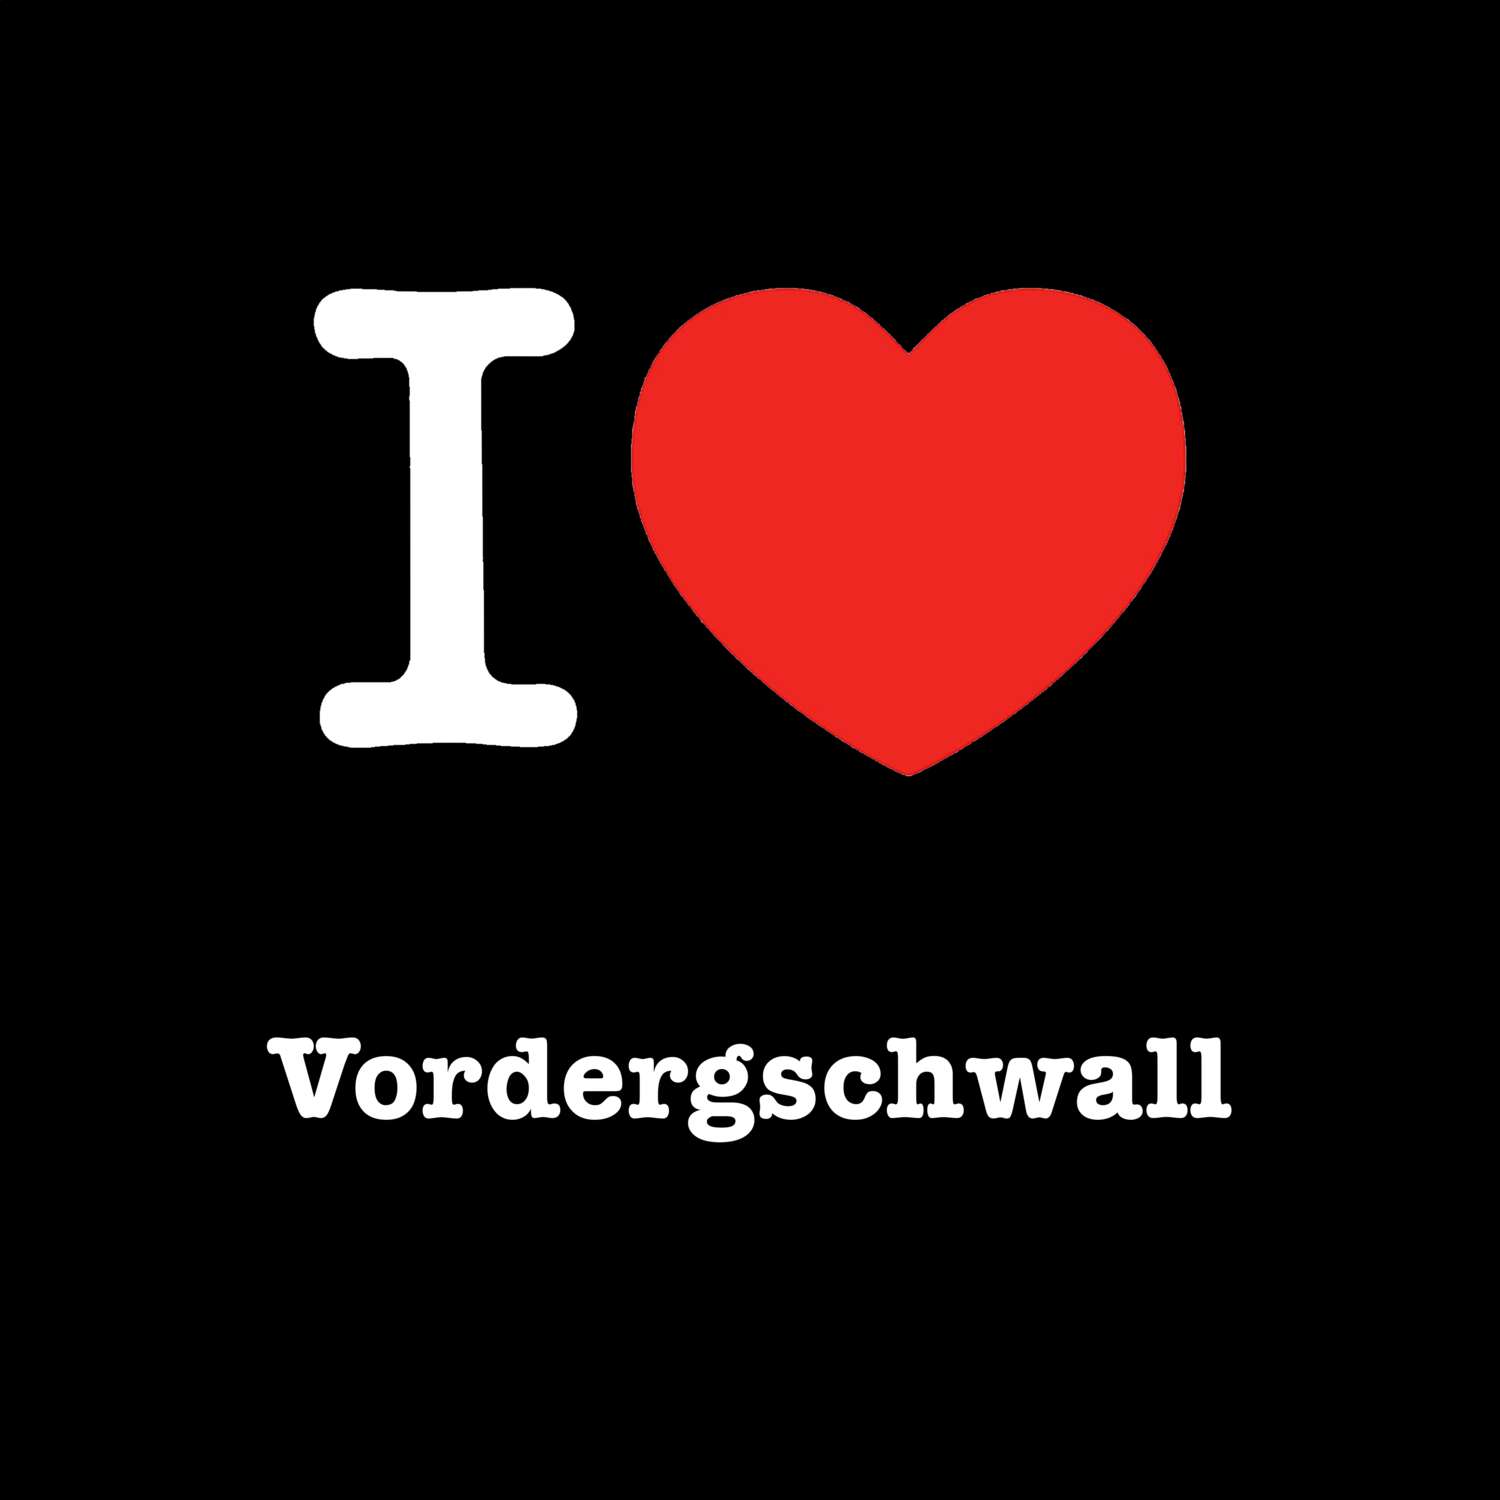 Vordergschwall T-Shirt »I love«